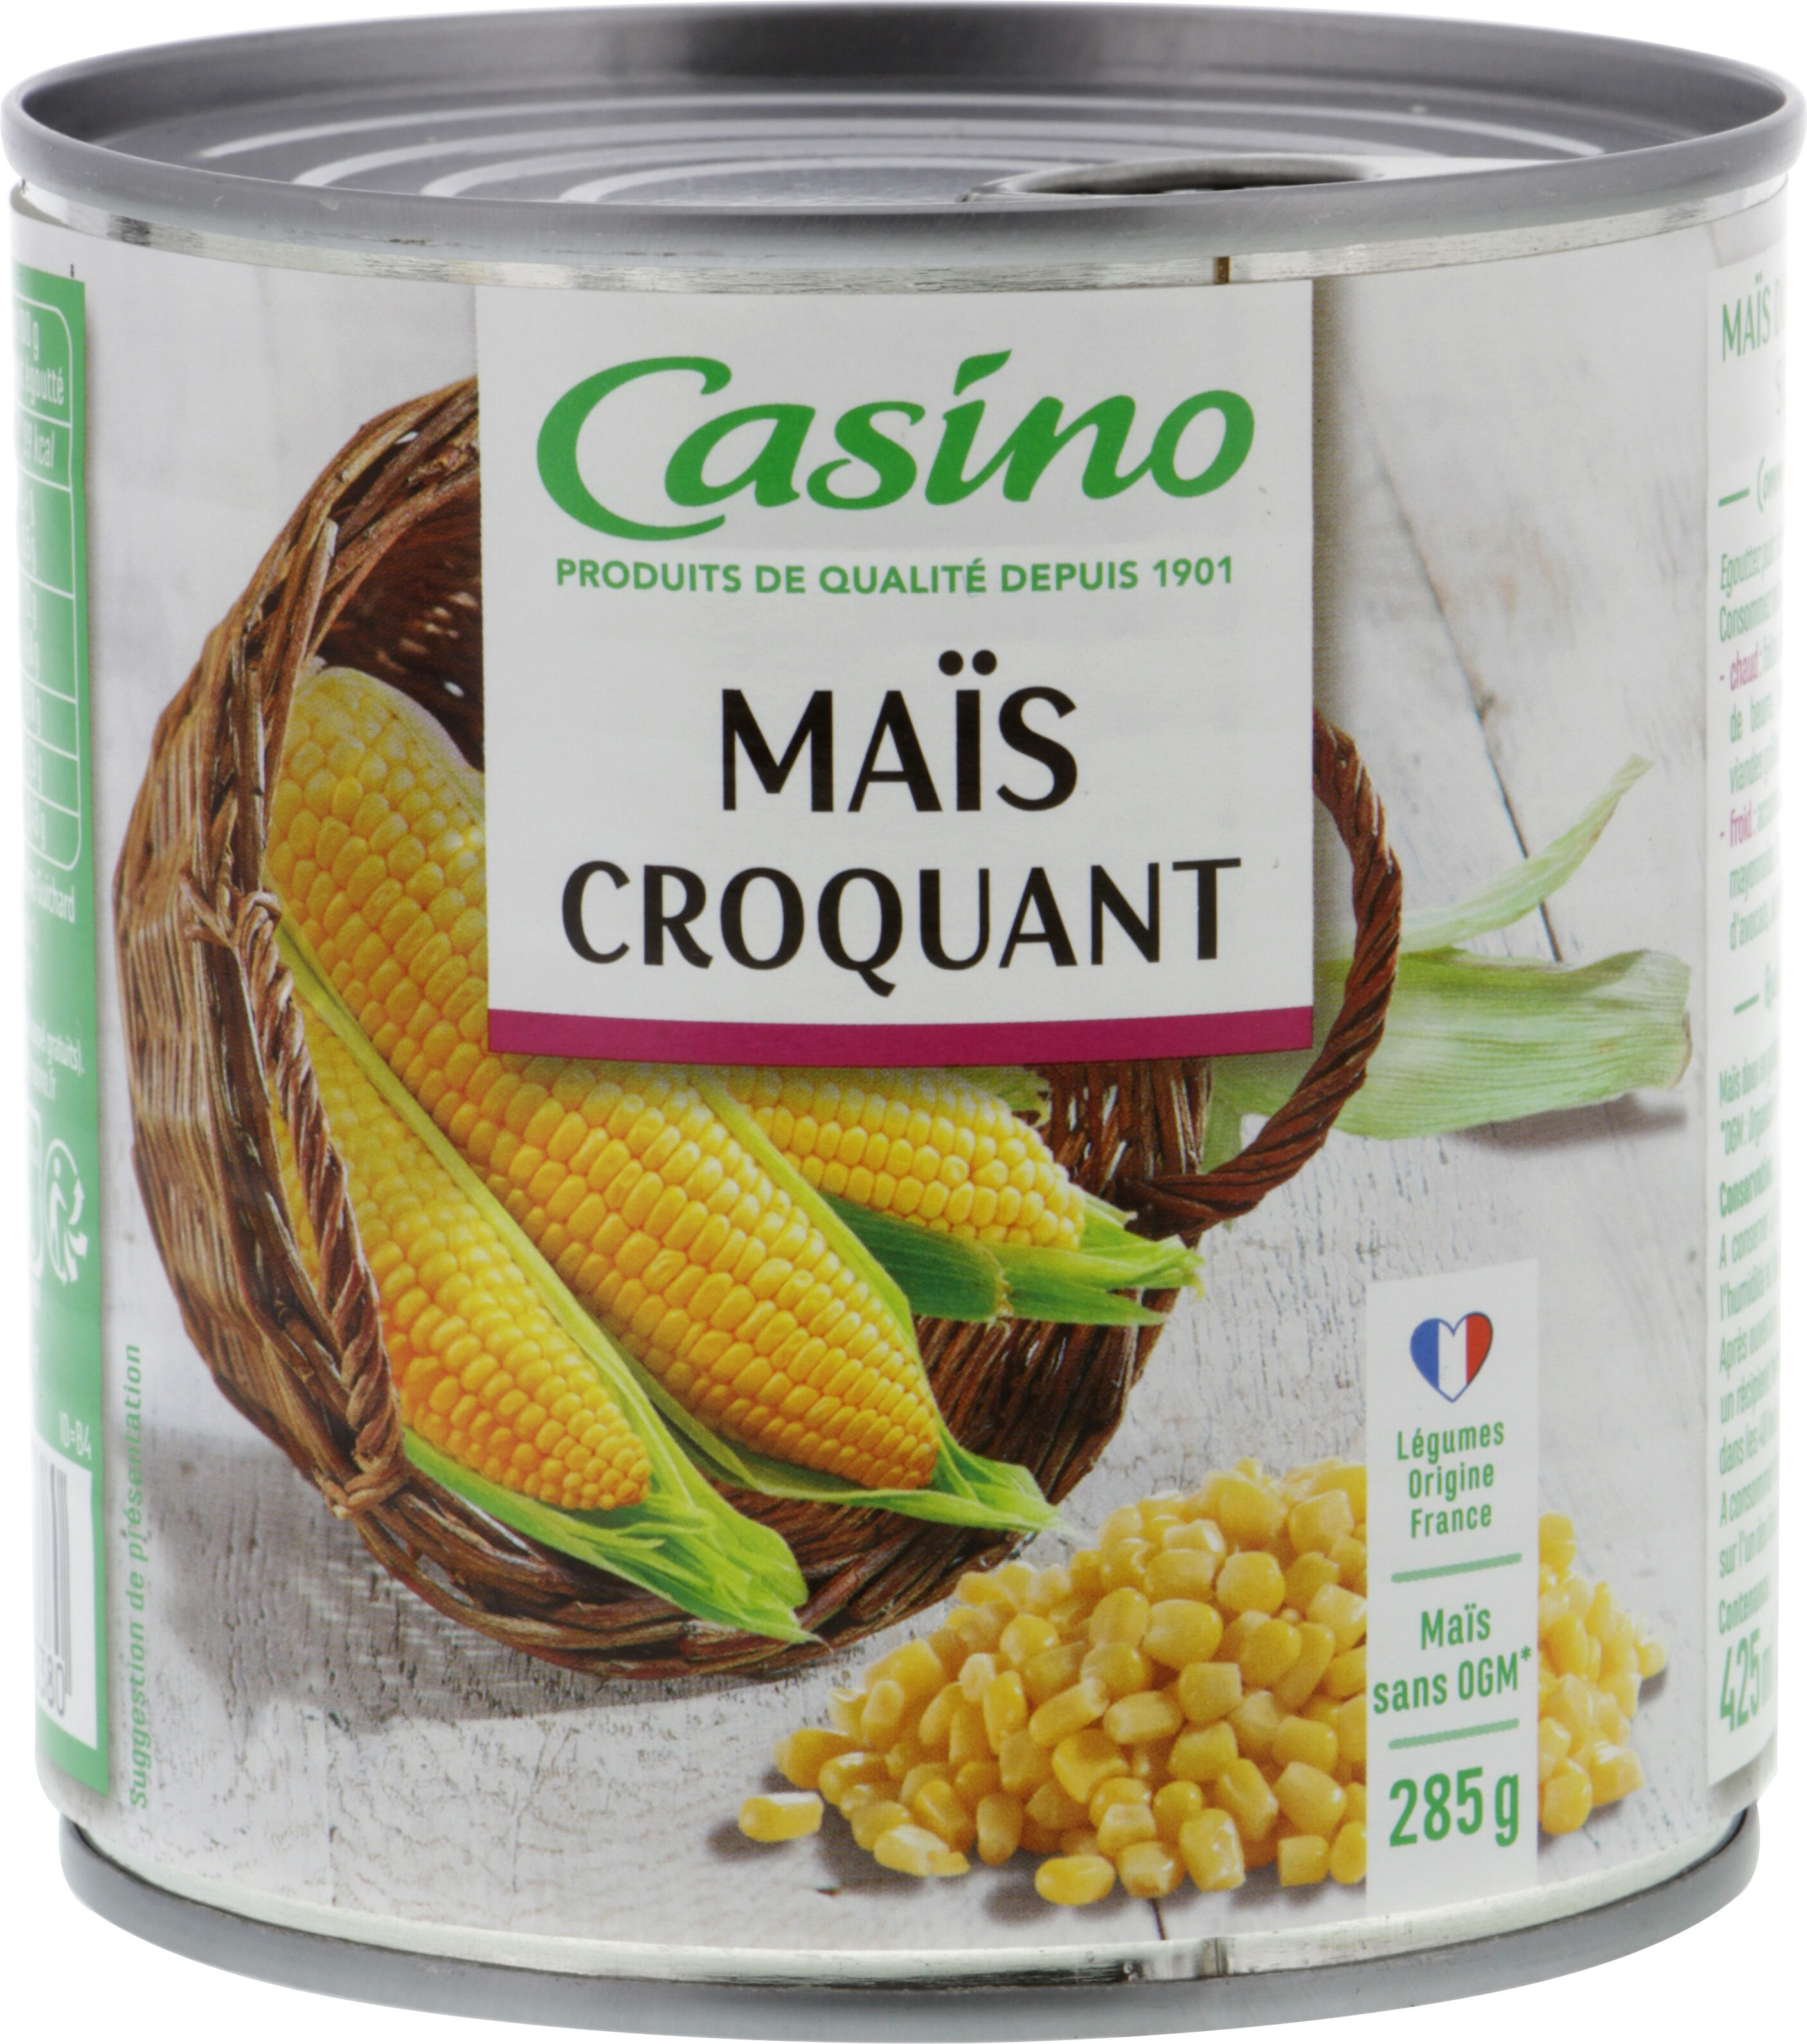 Maïs croquant - Product - fr